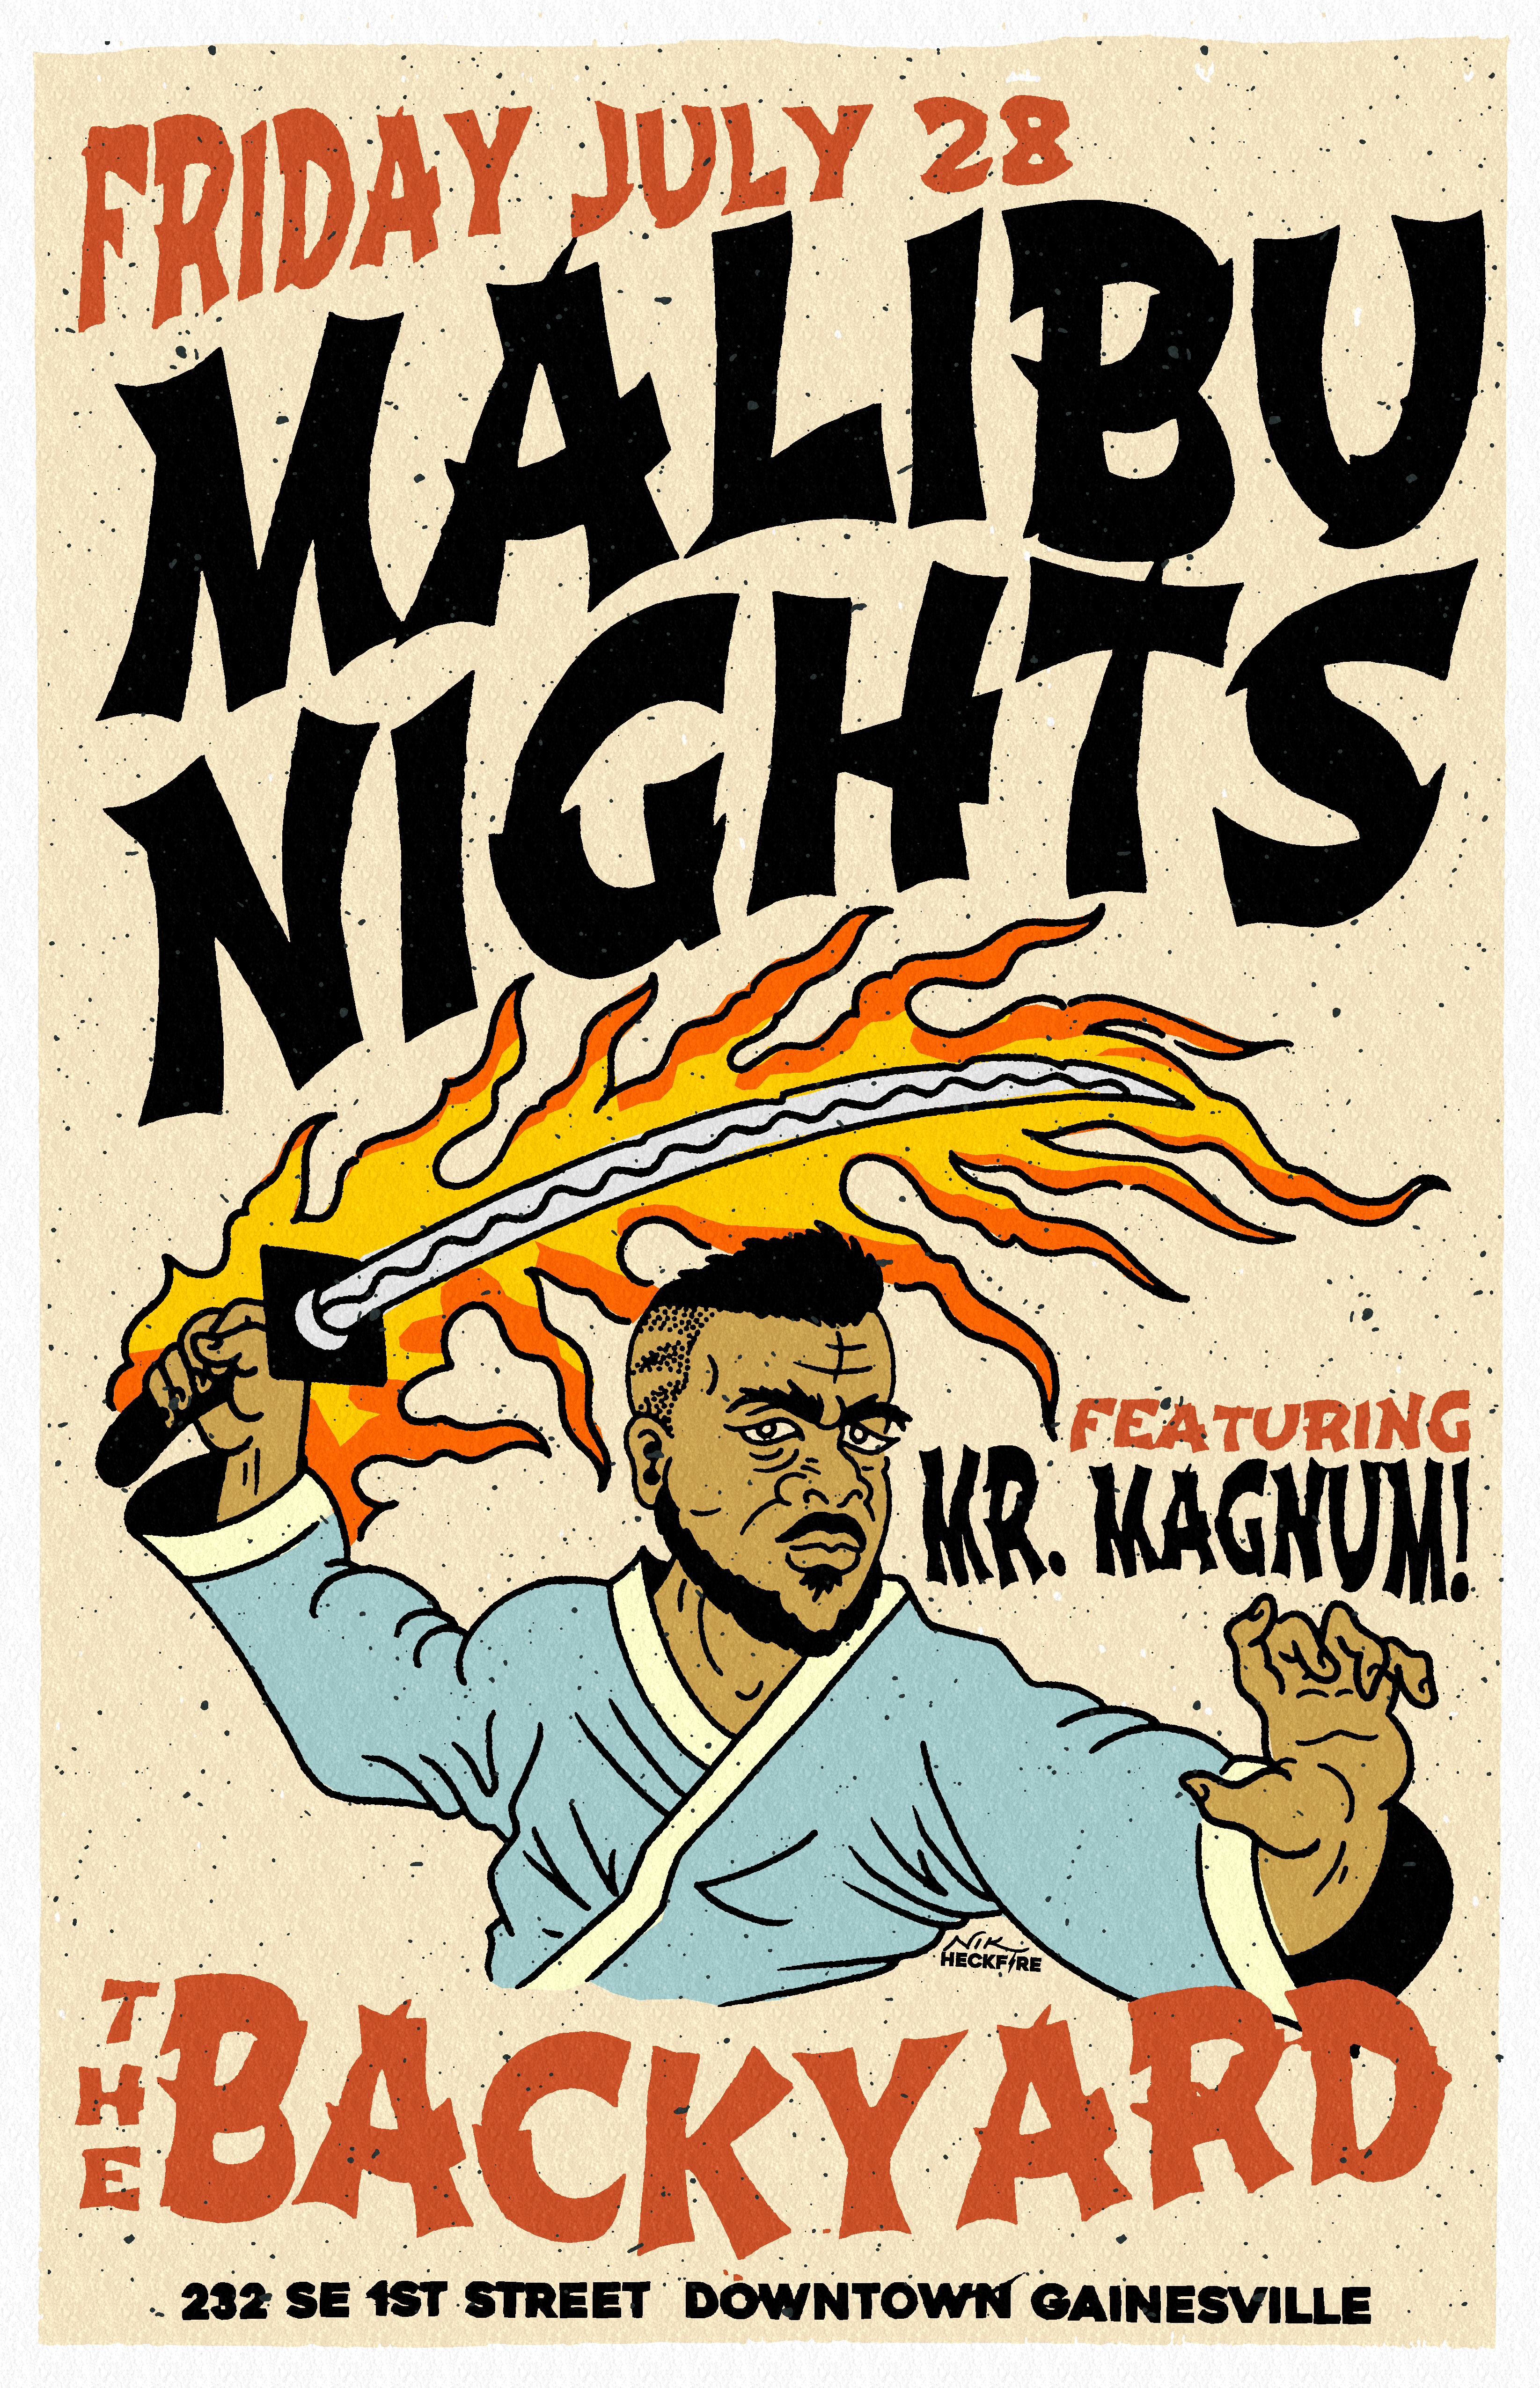 Malibu Nights featuring Mr. Magnum on 7/28/2017